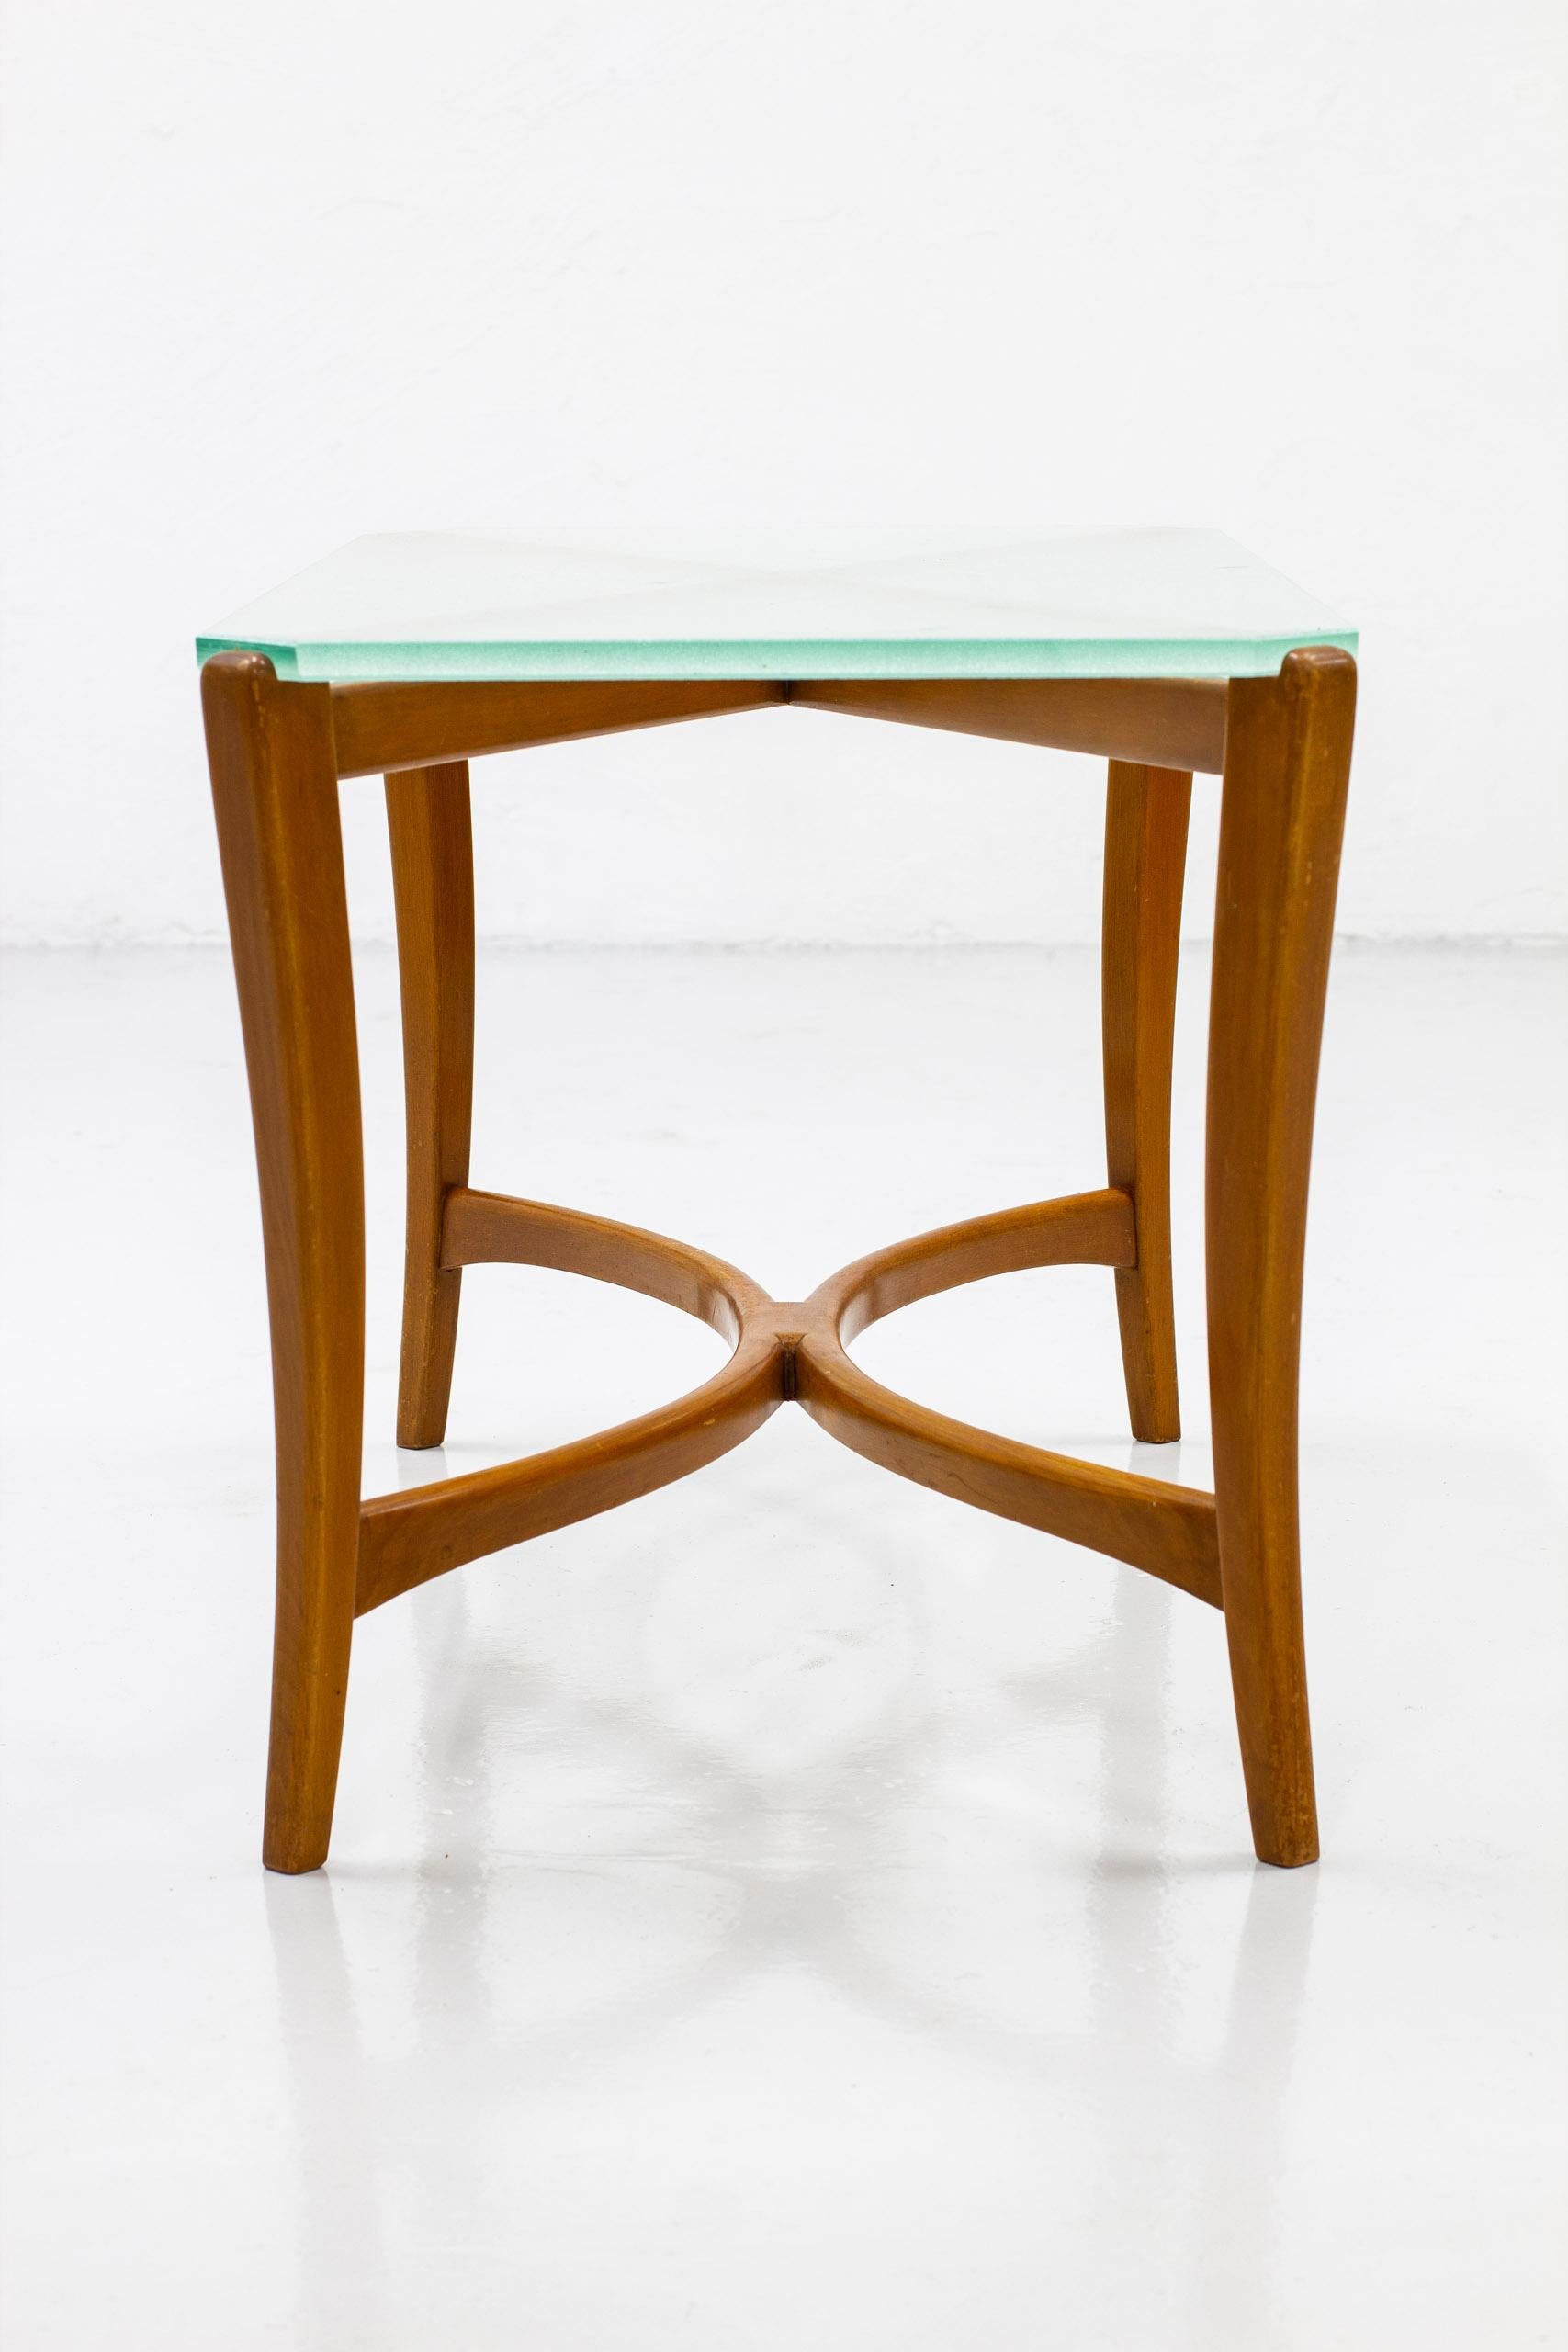 Swedish Modern Wood and Glass Sofa Table by Nordiska Kompaniet, Sweden, 1939 For Sale 1